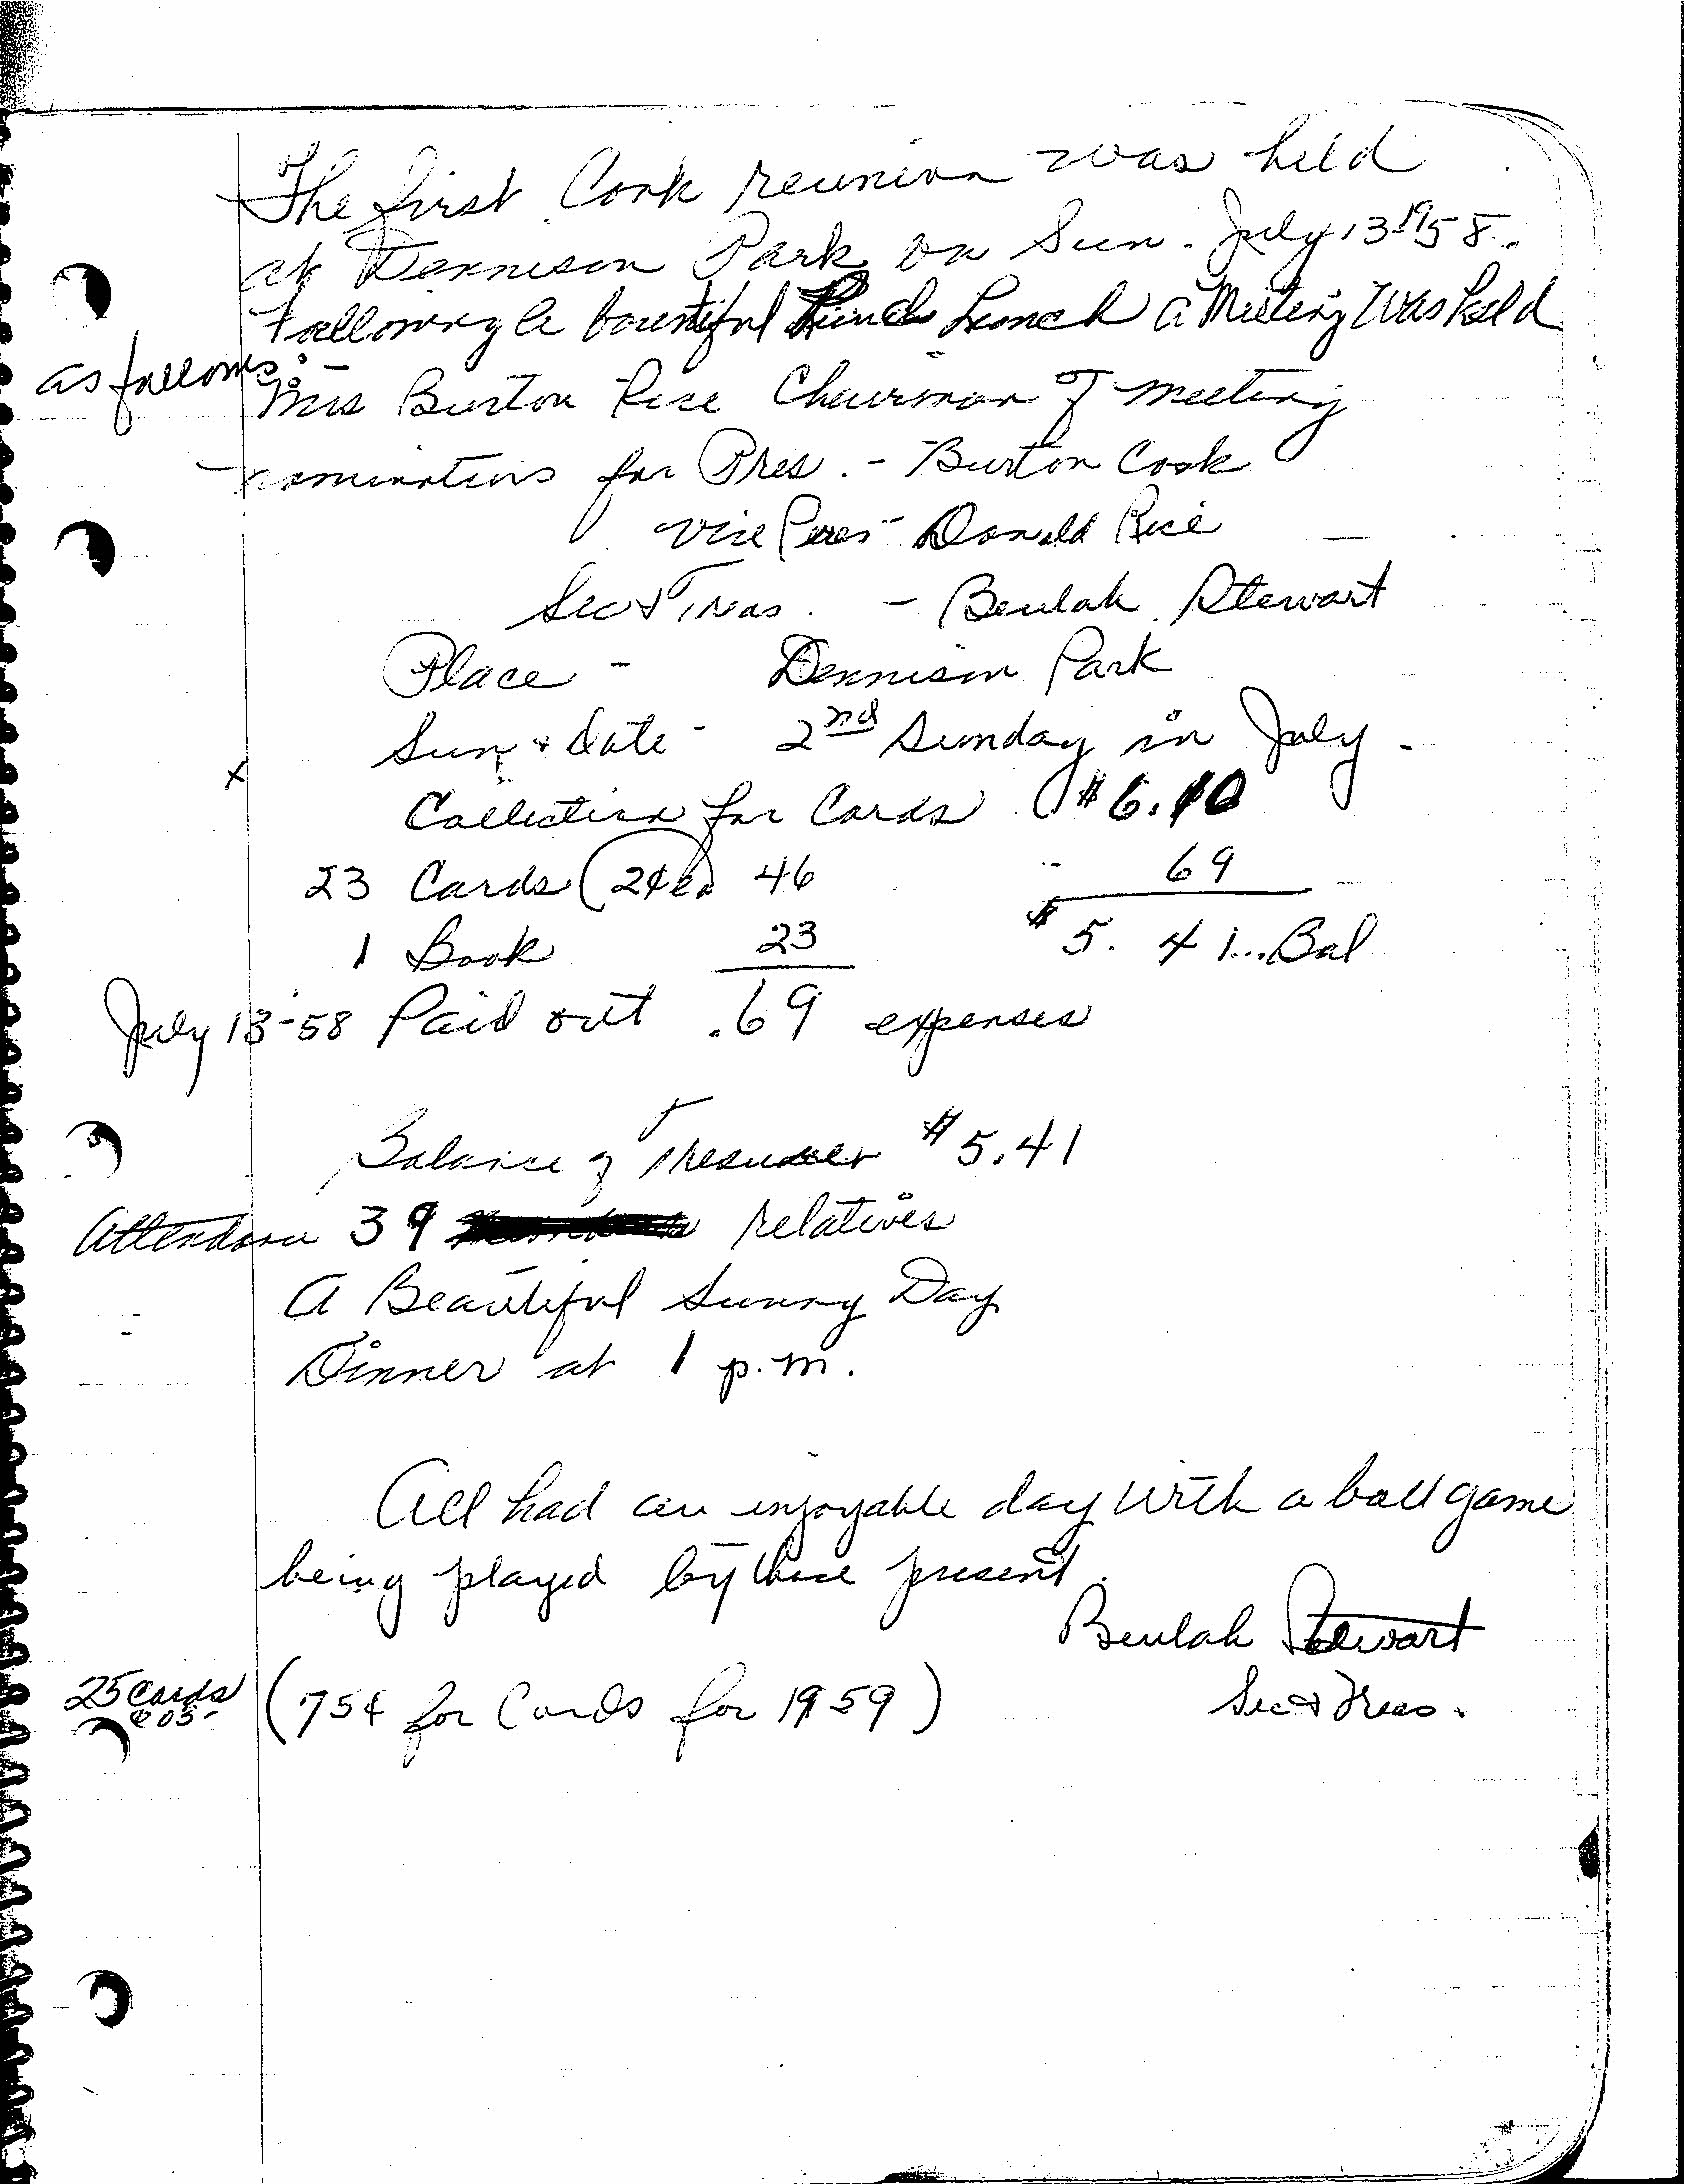 image of original, handwritten minutes